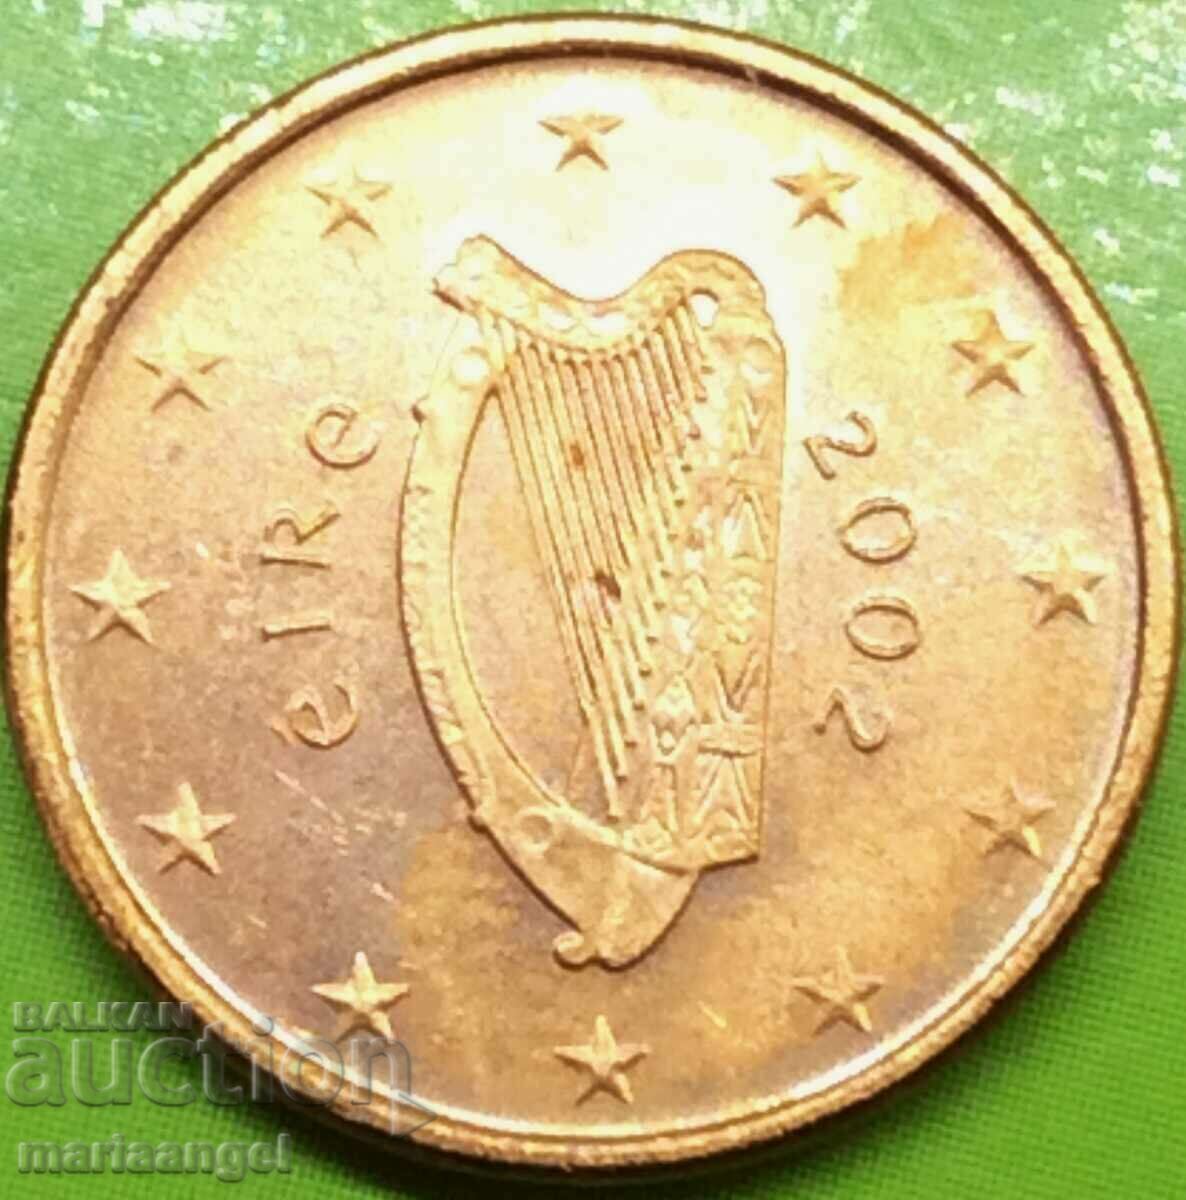 Ireland 1 euro cent 2002 - rare